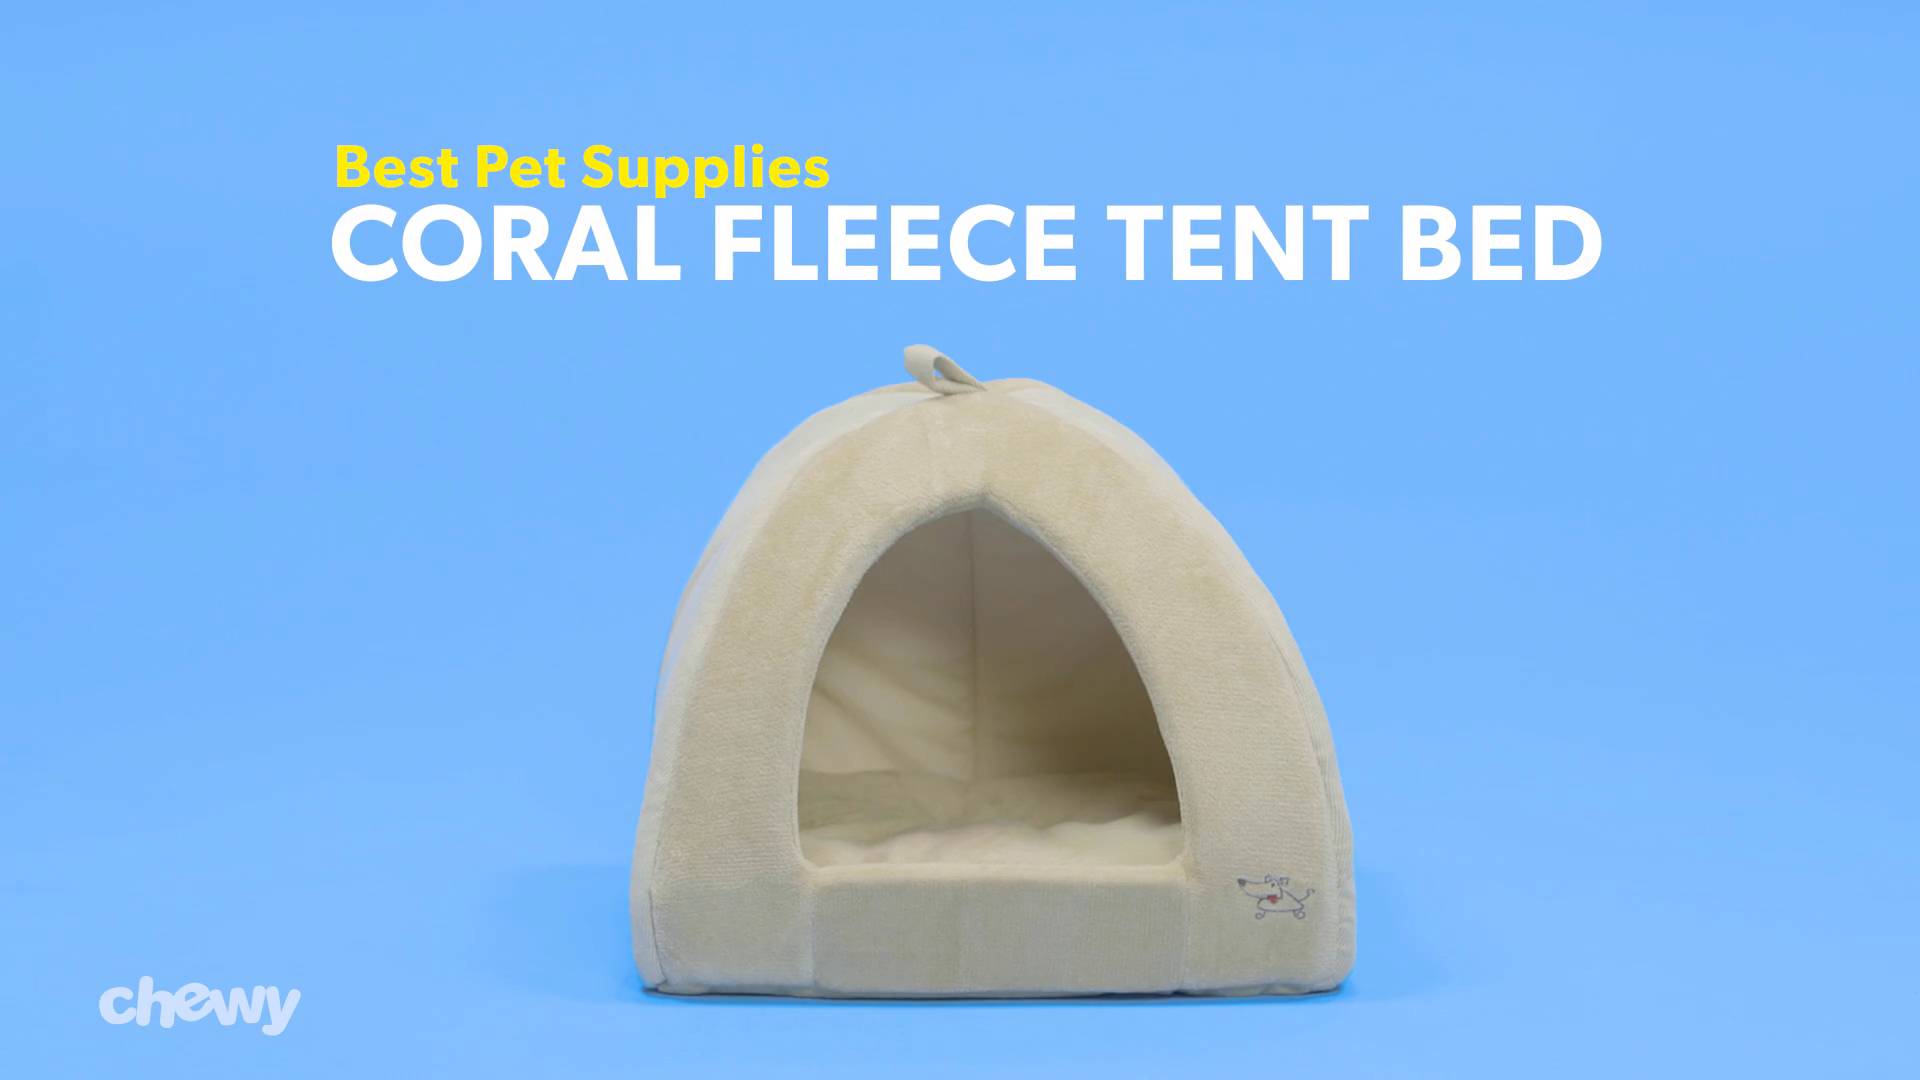 Best Pet Supplies Corduroy Tent Bed for Pets Large 18" x 18" Tan 